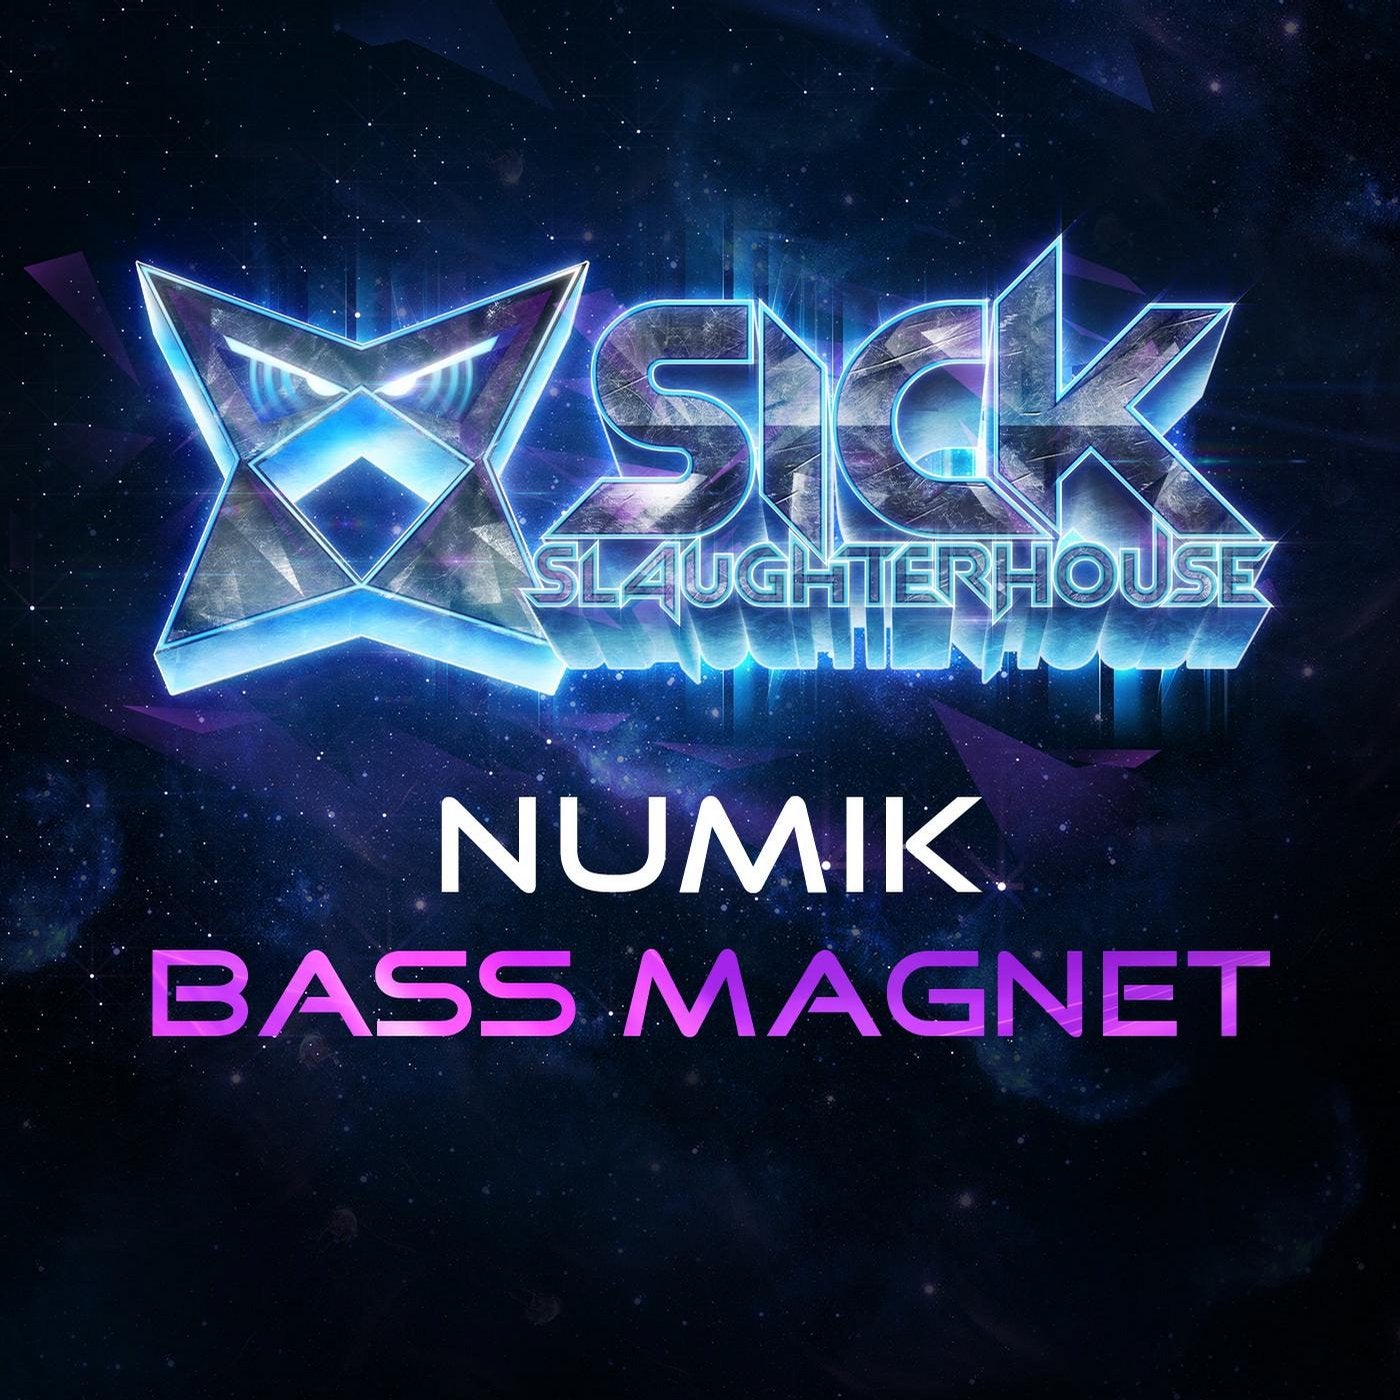 Numik - Bass Magnet [Sick Slaughterhouse]